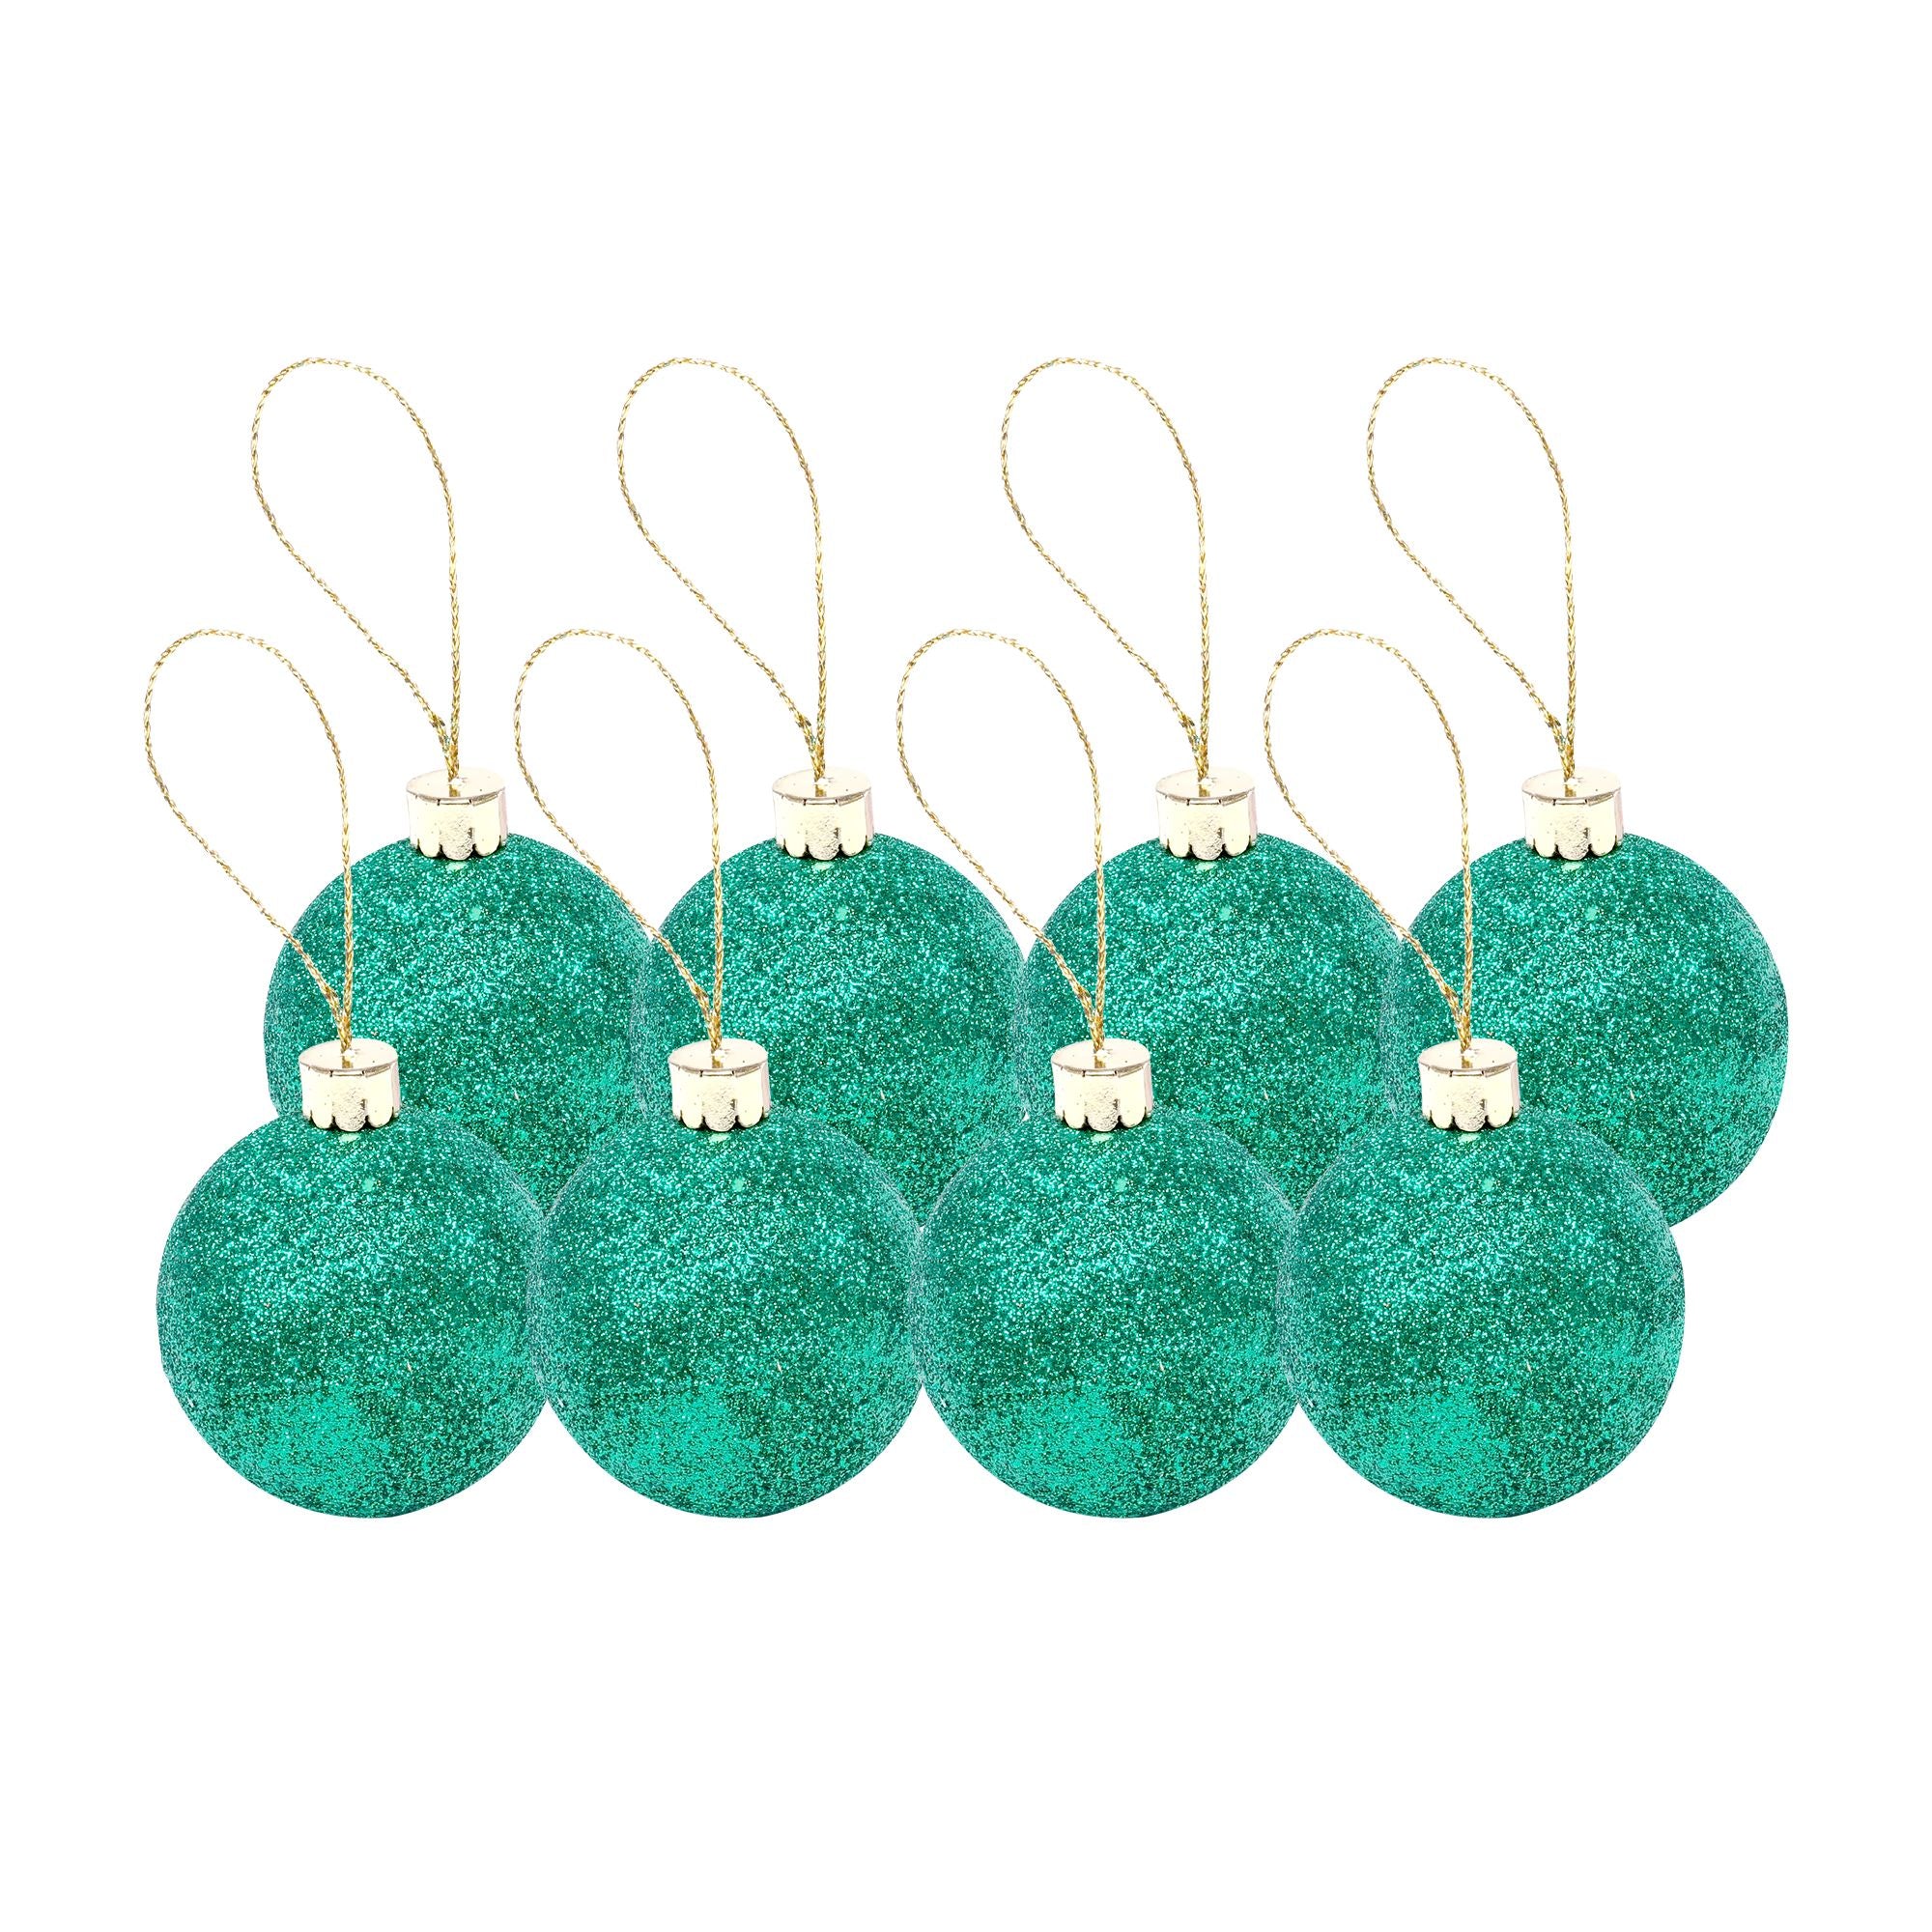 Handmade Christmas Ornaments - Glitter Baubles, 50mm, Green, 8pc